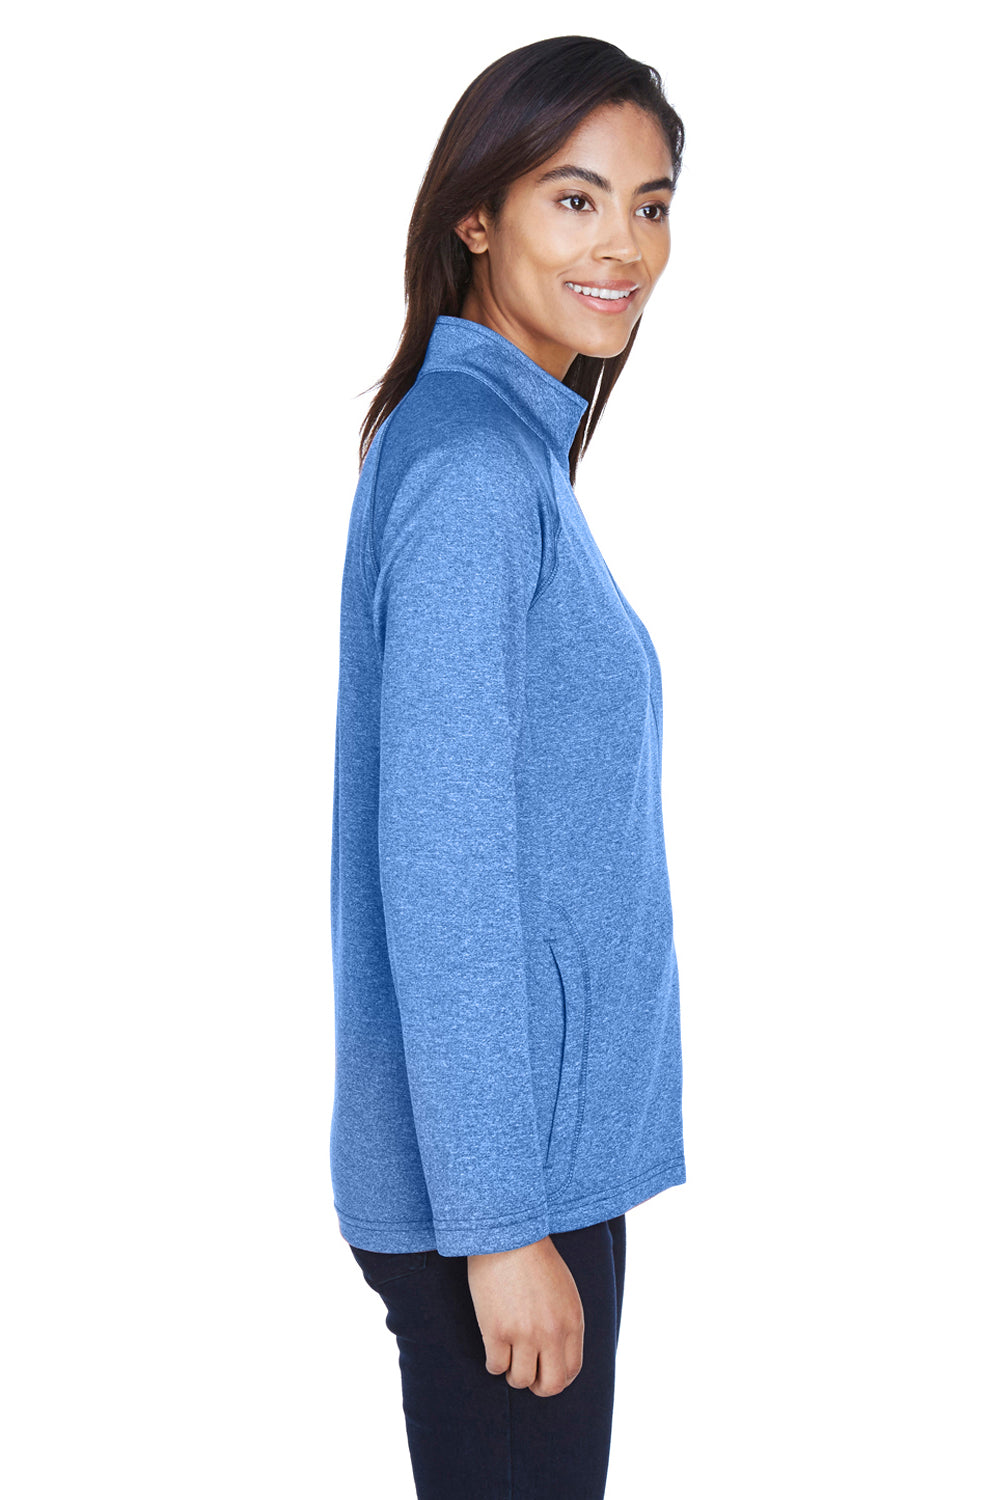 Devon & Jones DG420W Womens Compass Stretch Tech Moisture Wicking Full Zip Sweatshirt French Blue Side